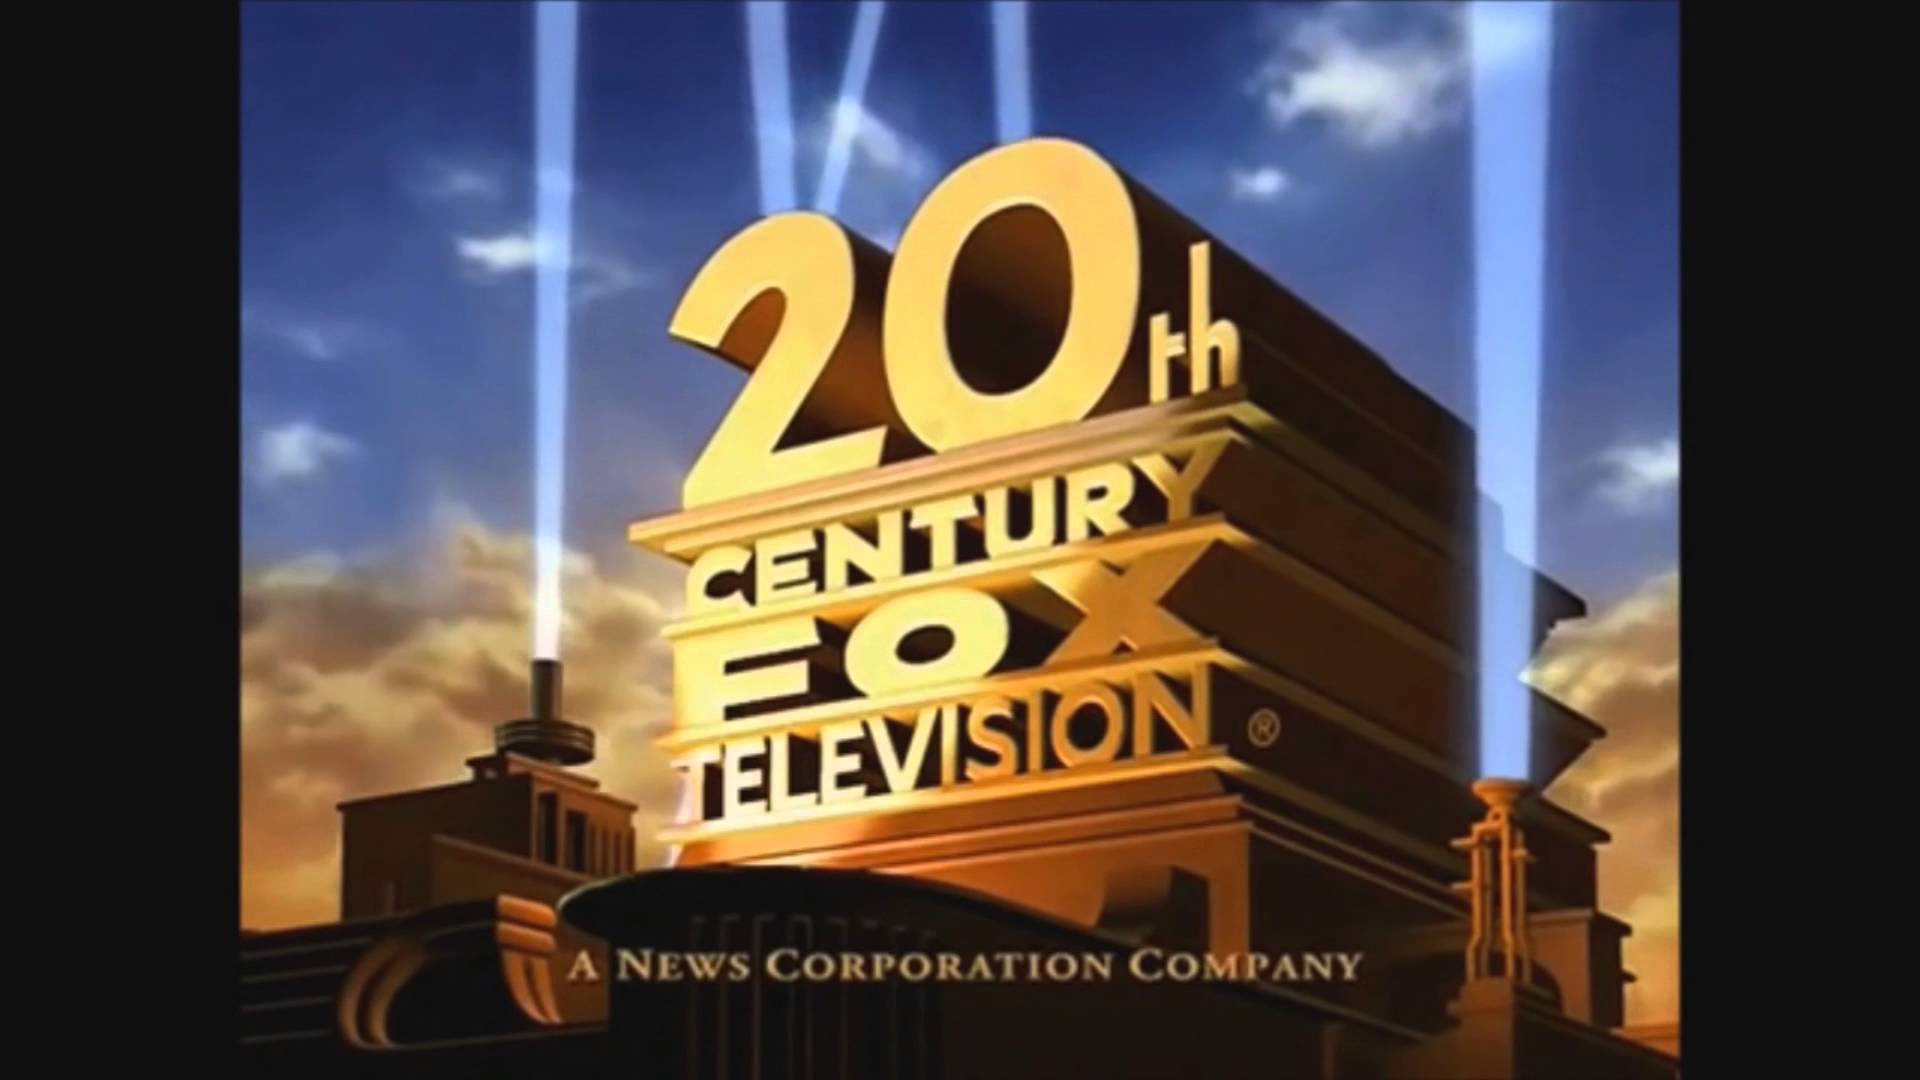 20th Century Fox Television Logos